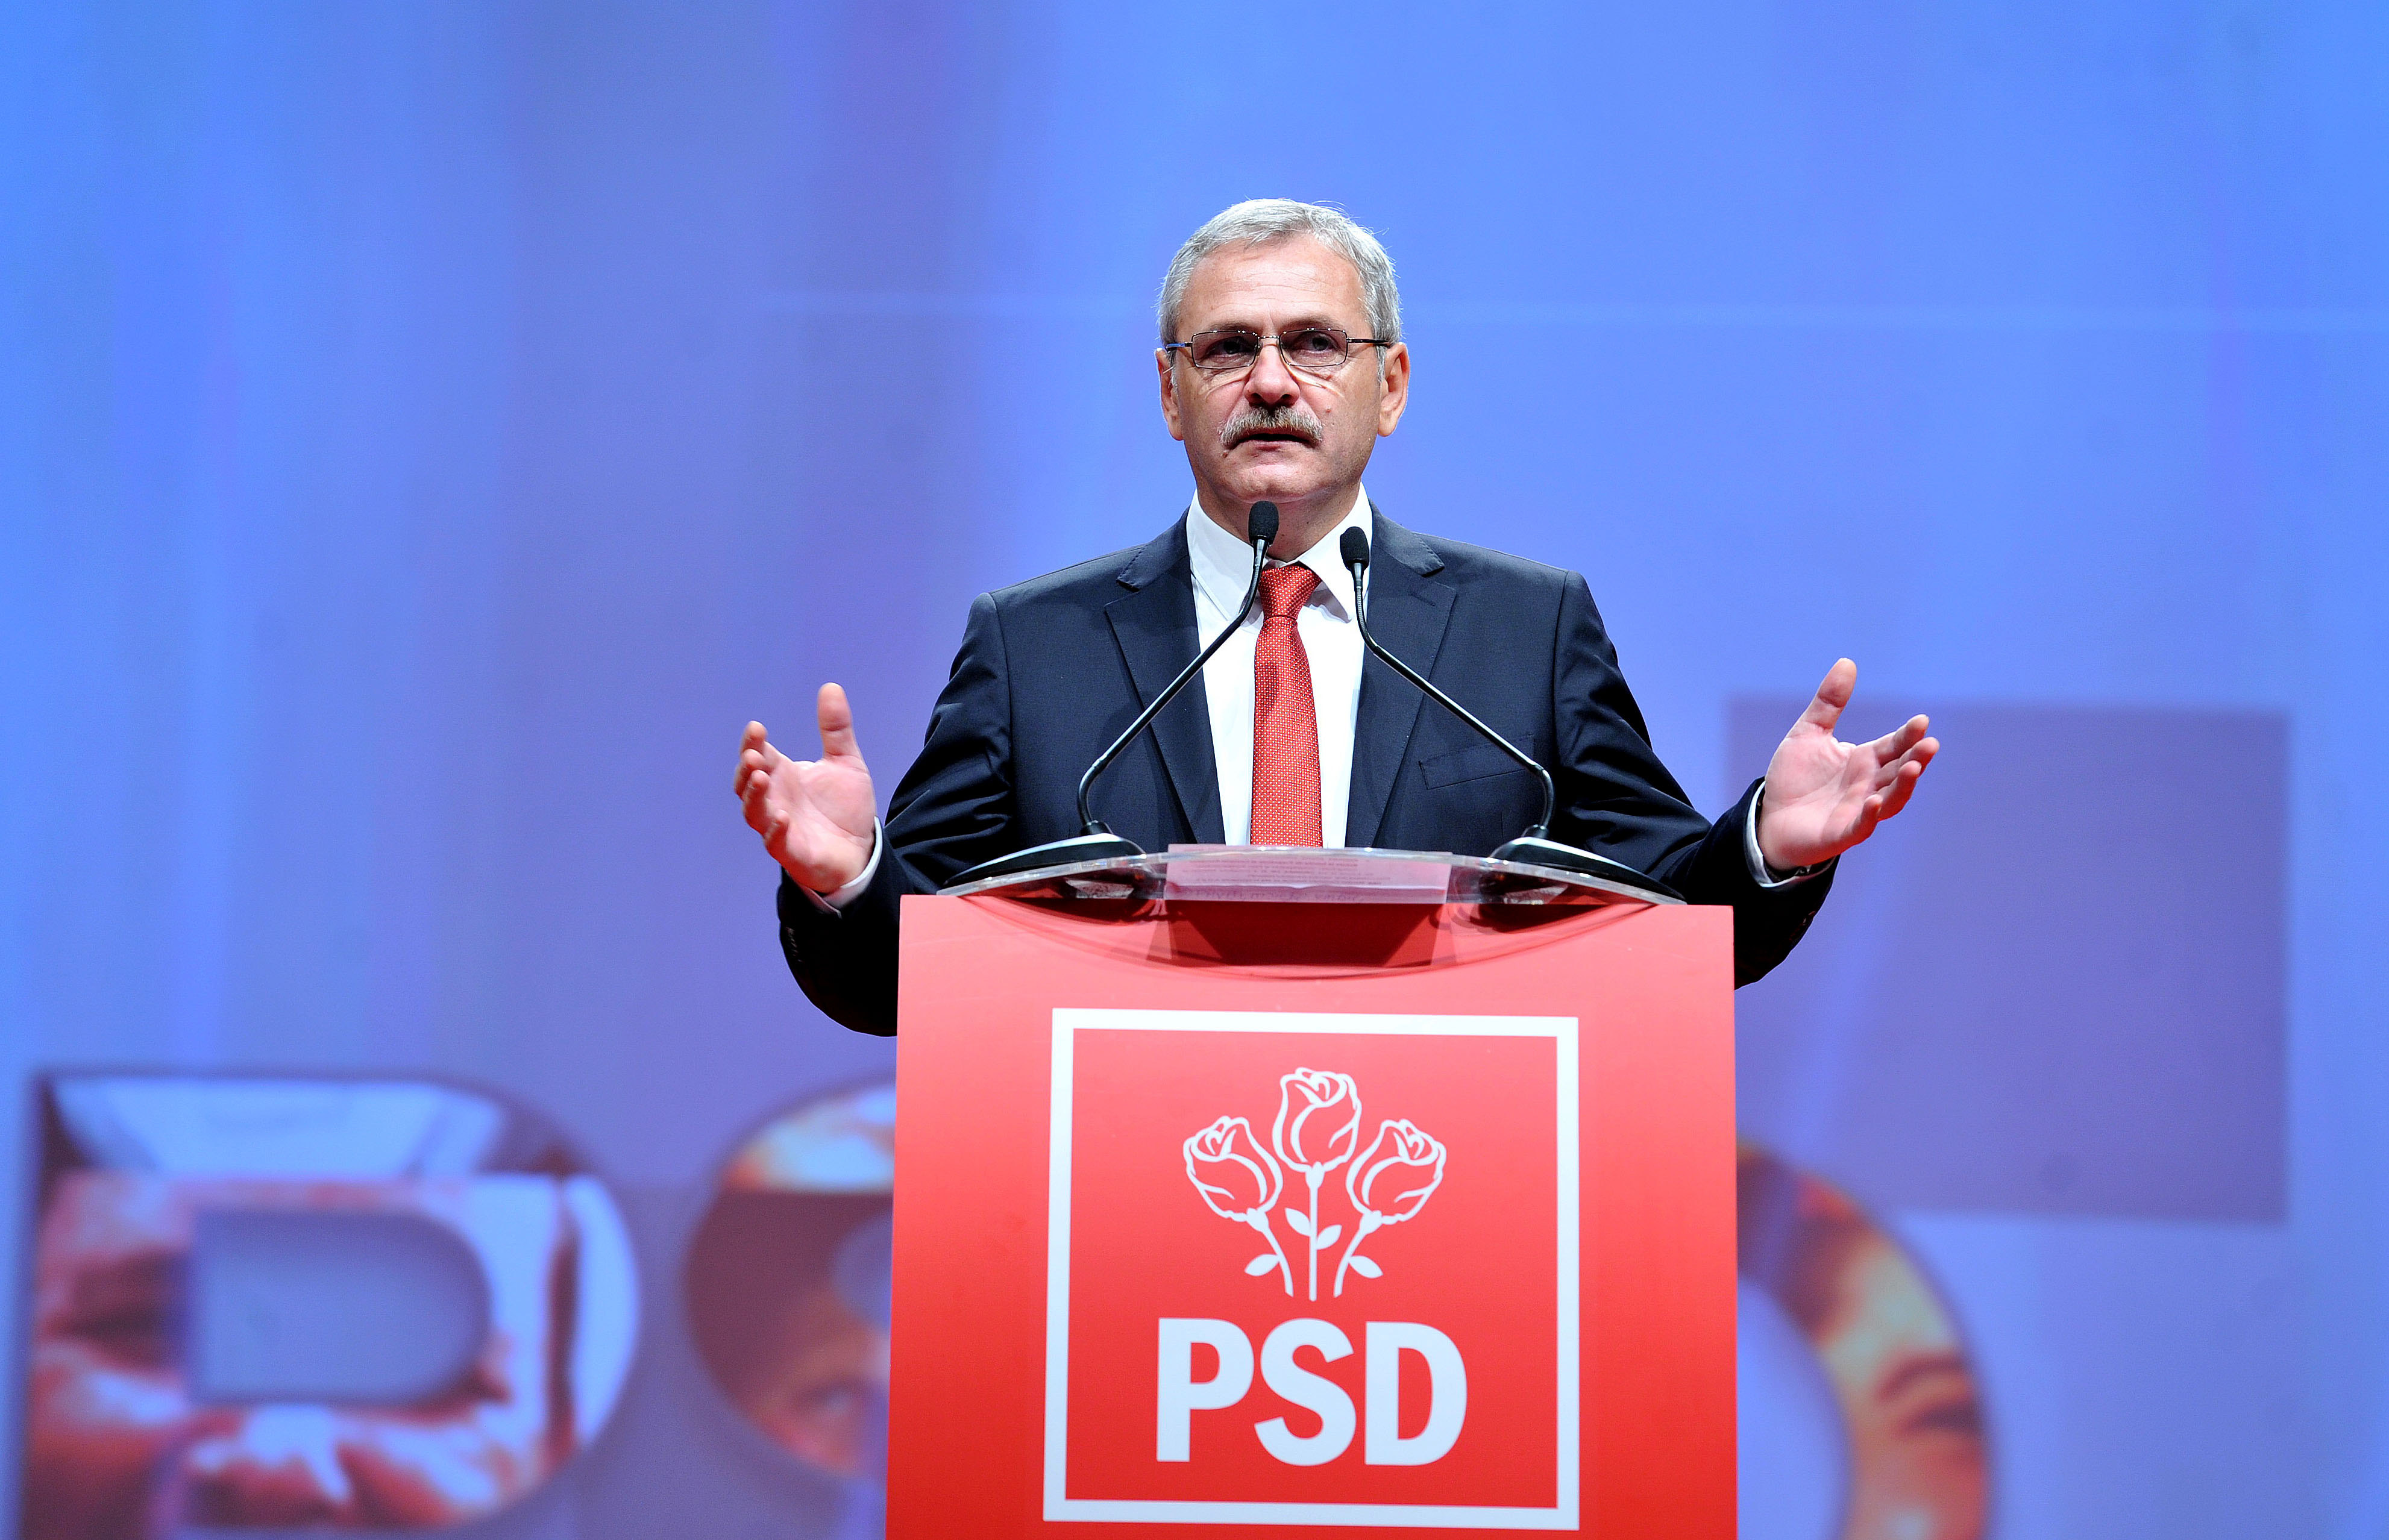 Liviu Dragnea during a meeting of his party (Photo credit: Partidul Social Democrat/Flickr)